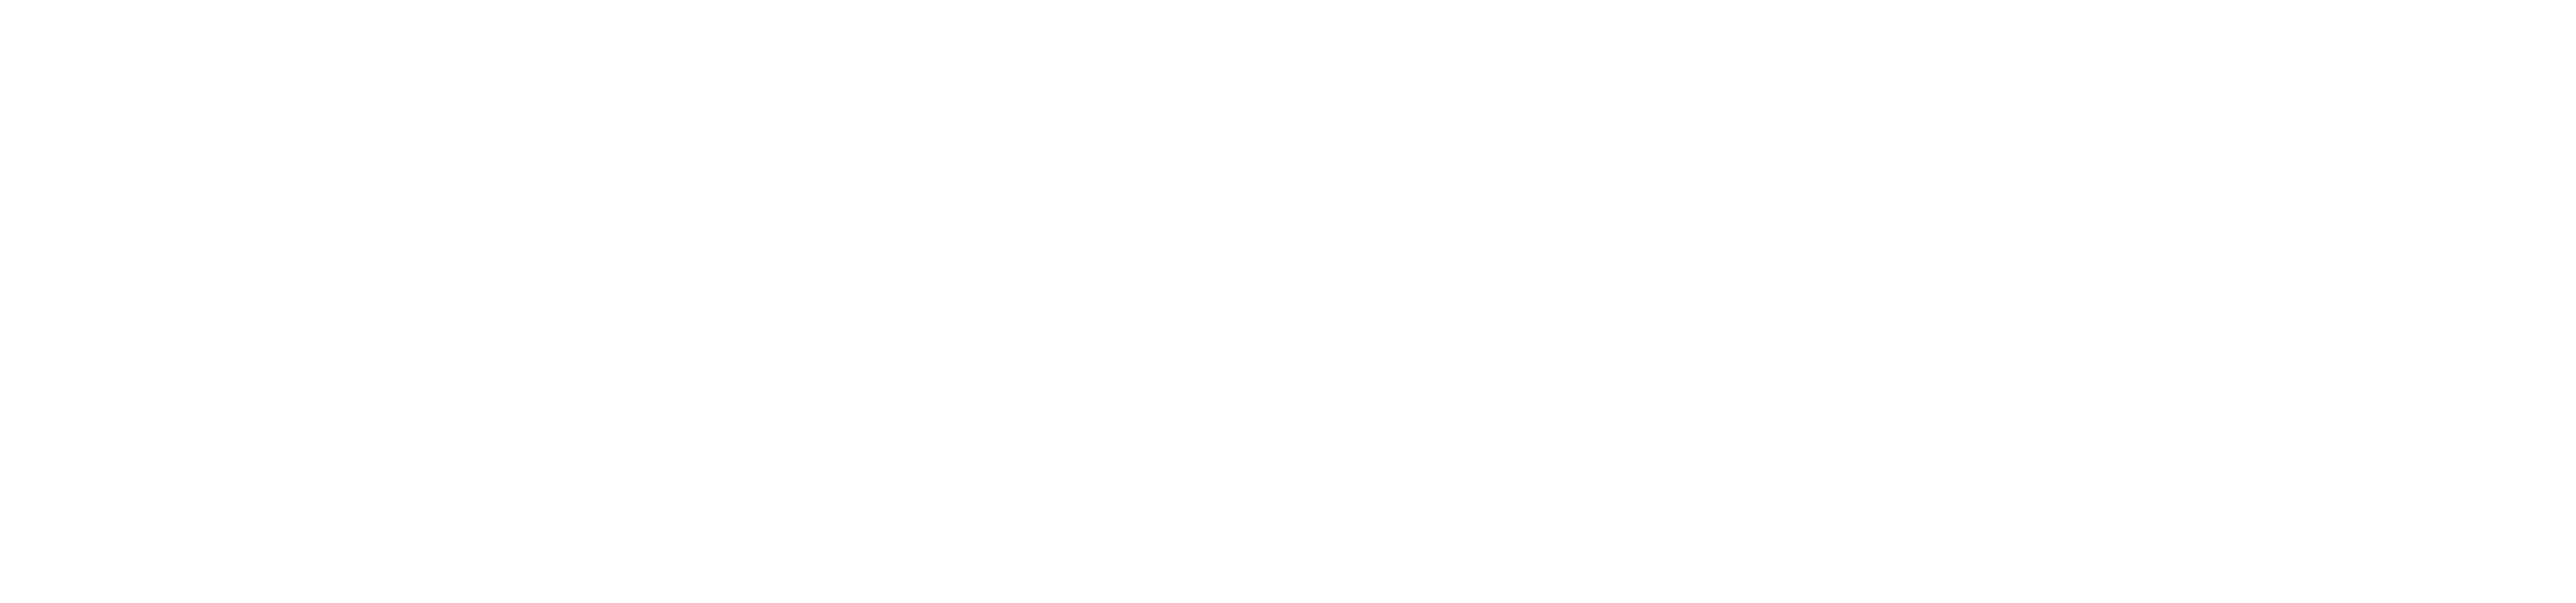 Co D logo